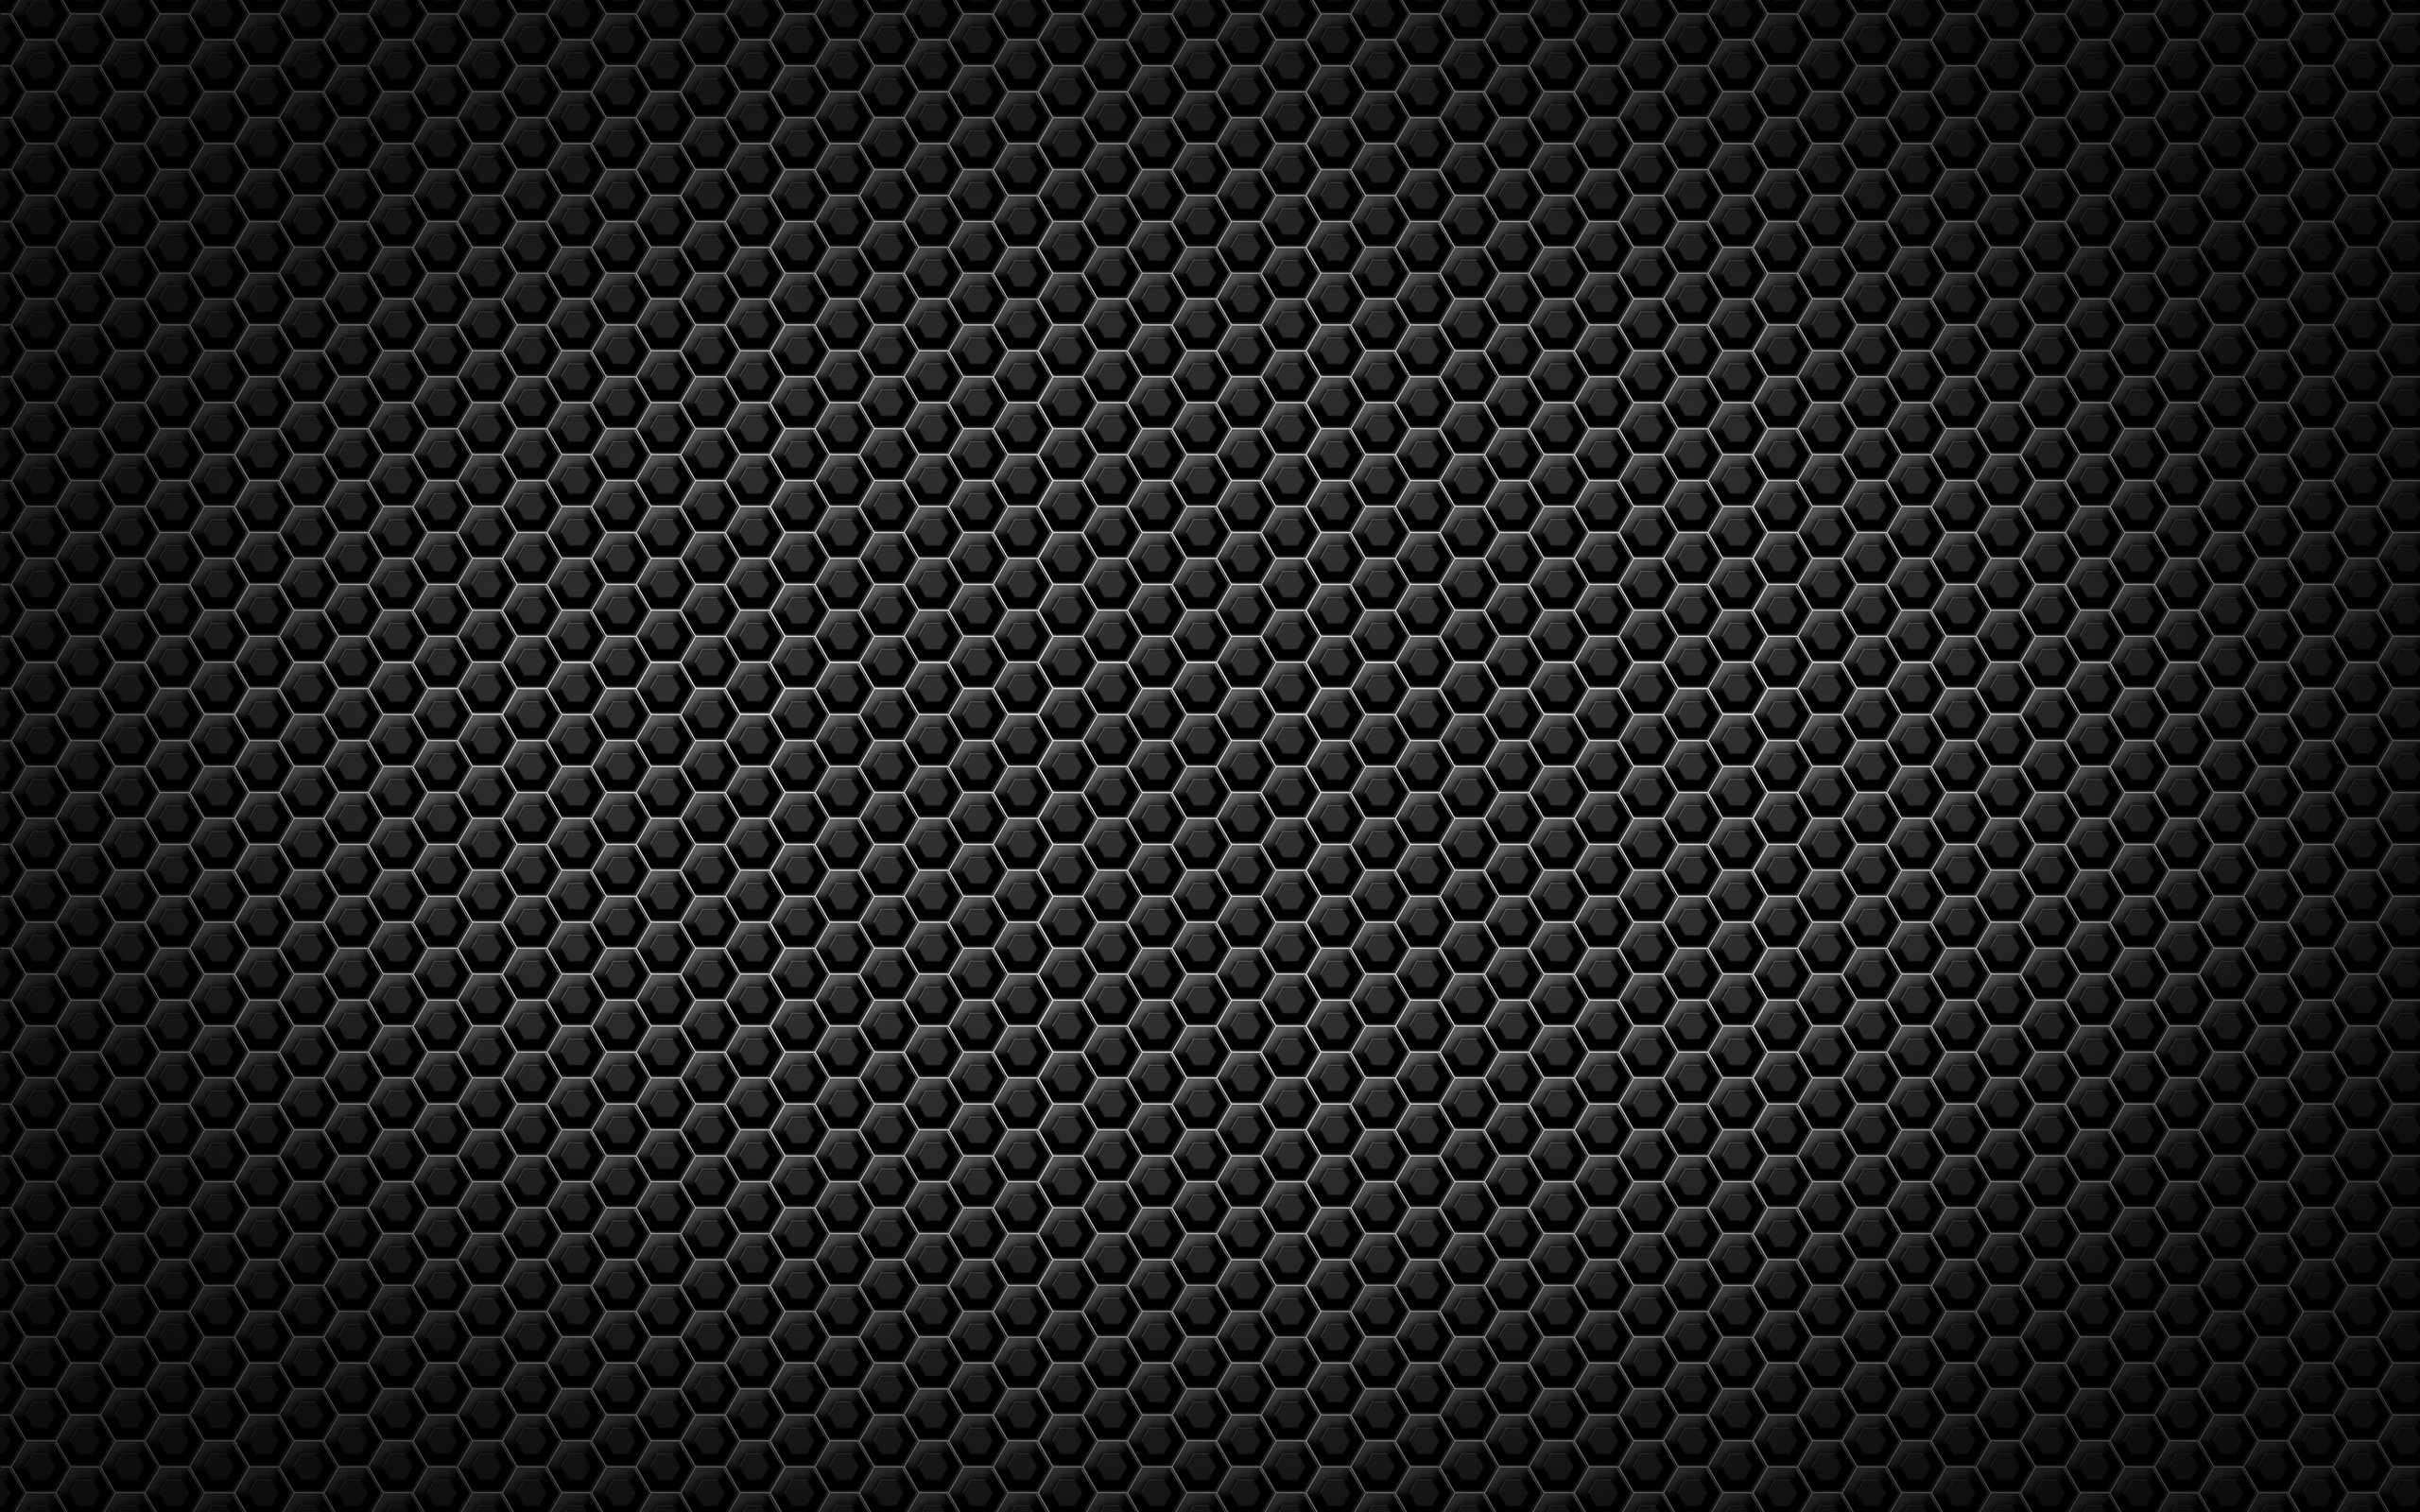 Digital blasphemy black wallpaper rose backgrounds pattern